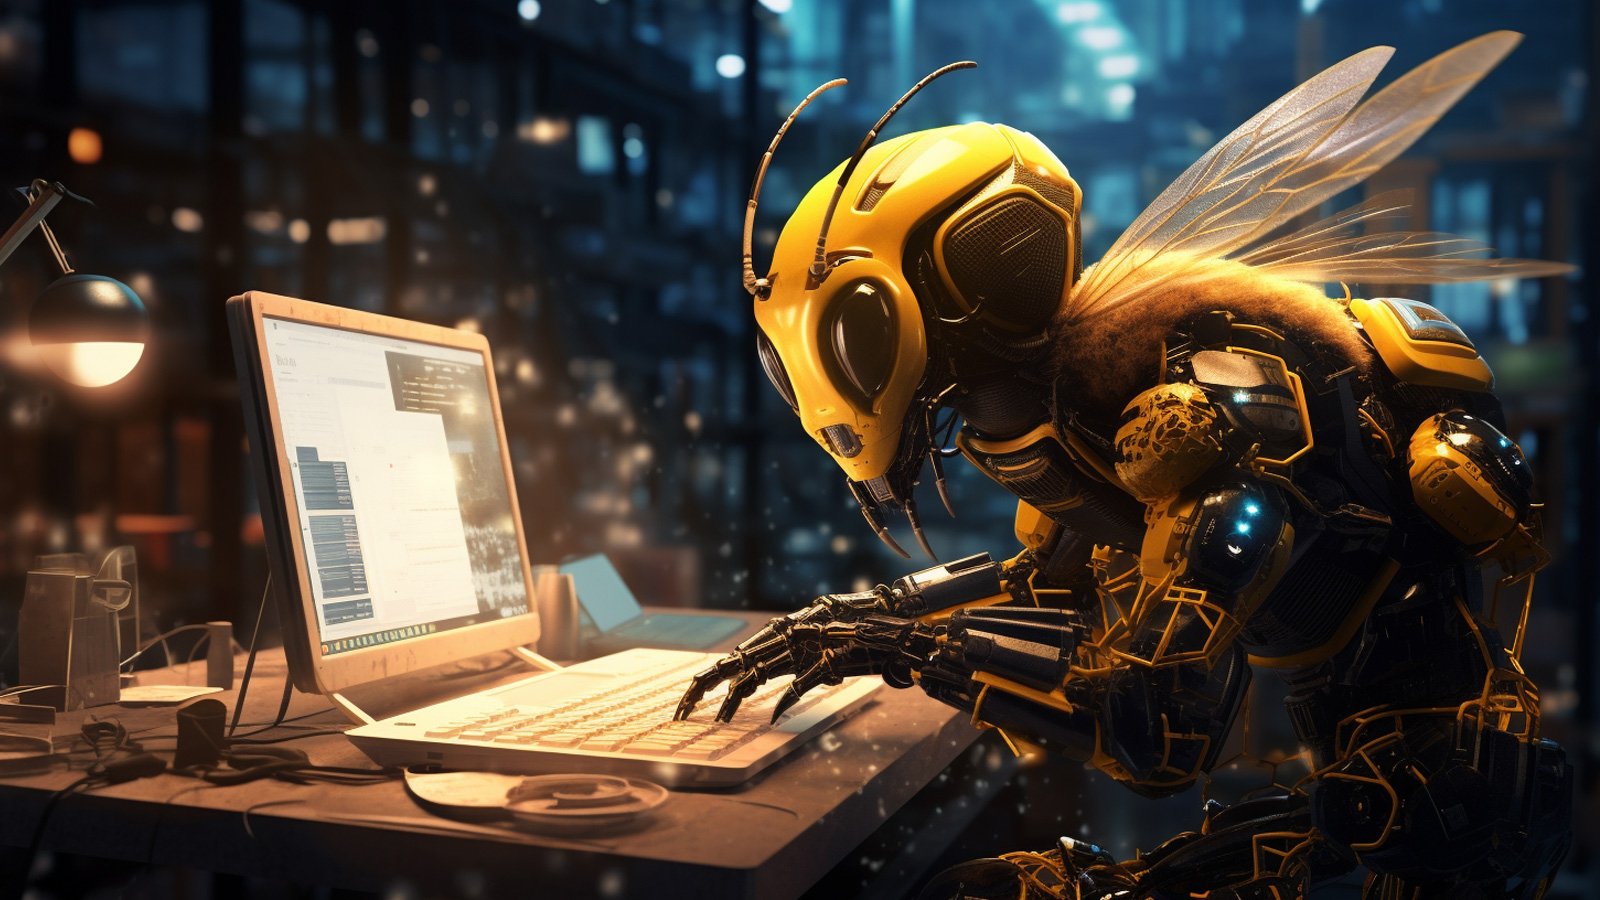 Bumblebee malware returns in new attacks abusing WebDAV folders – Source: www.bleepingcomputer.com